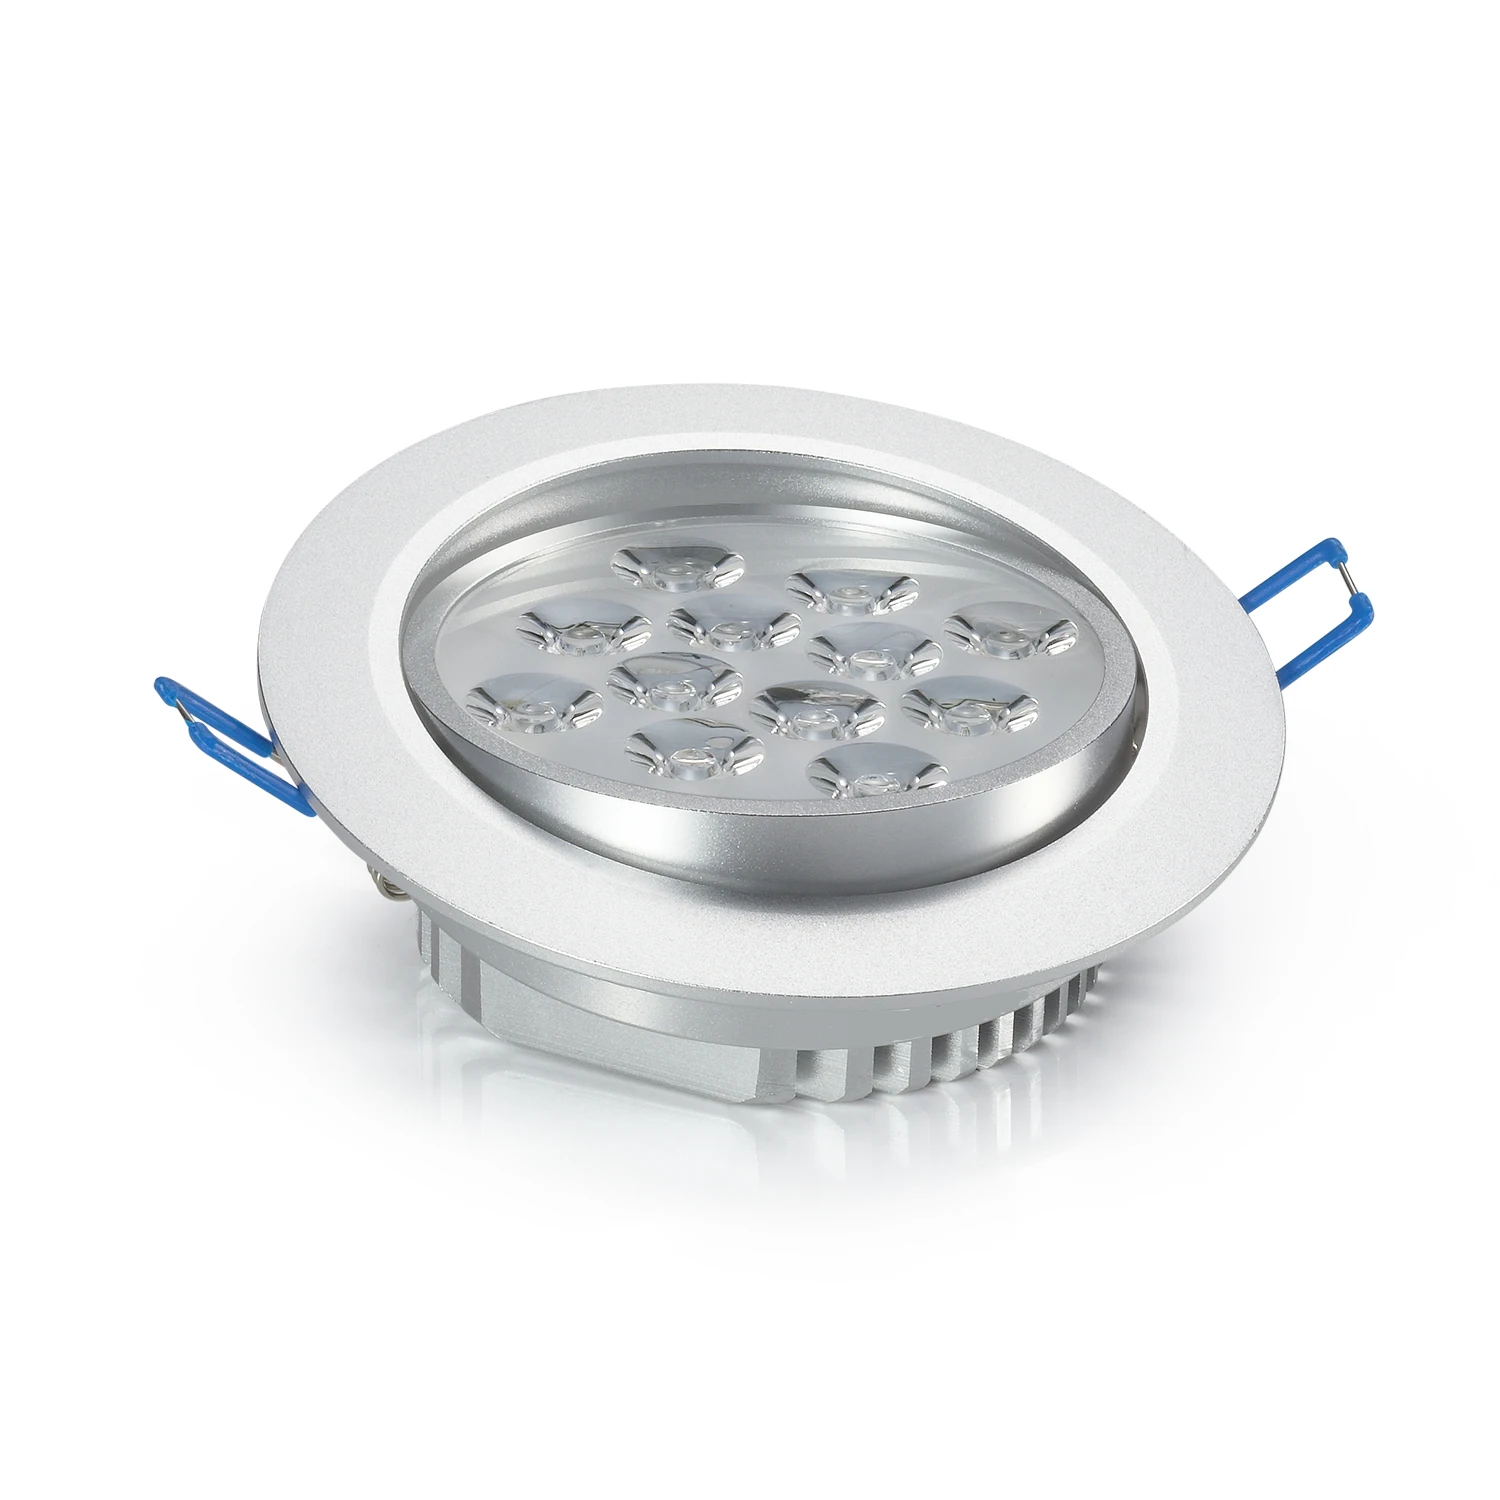 High Brightness 12 Watt Led Downlight Recessed Surface Downlight Round LED Ceiling Lamp Cabinet Led Spot Light